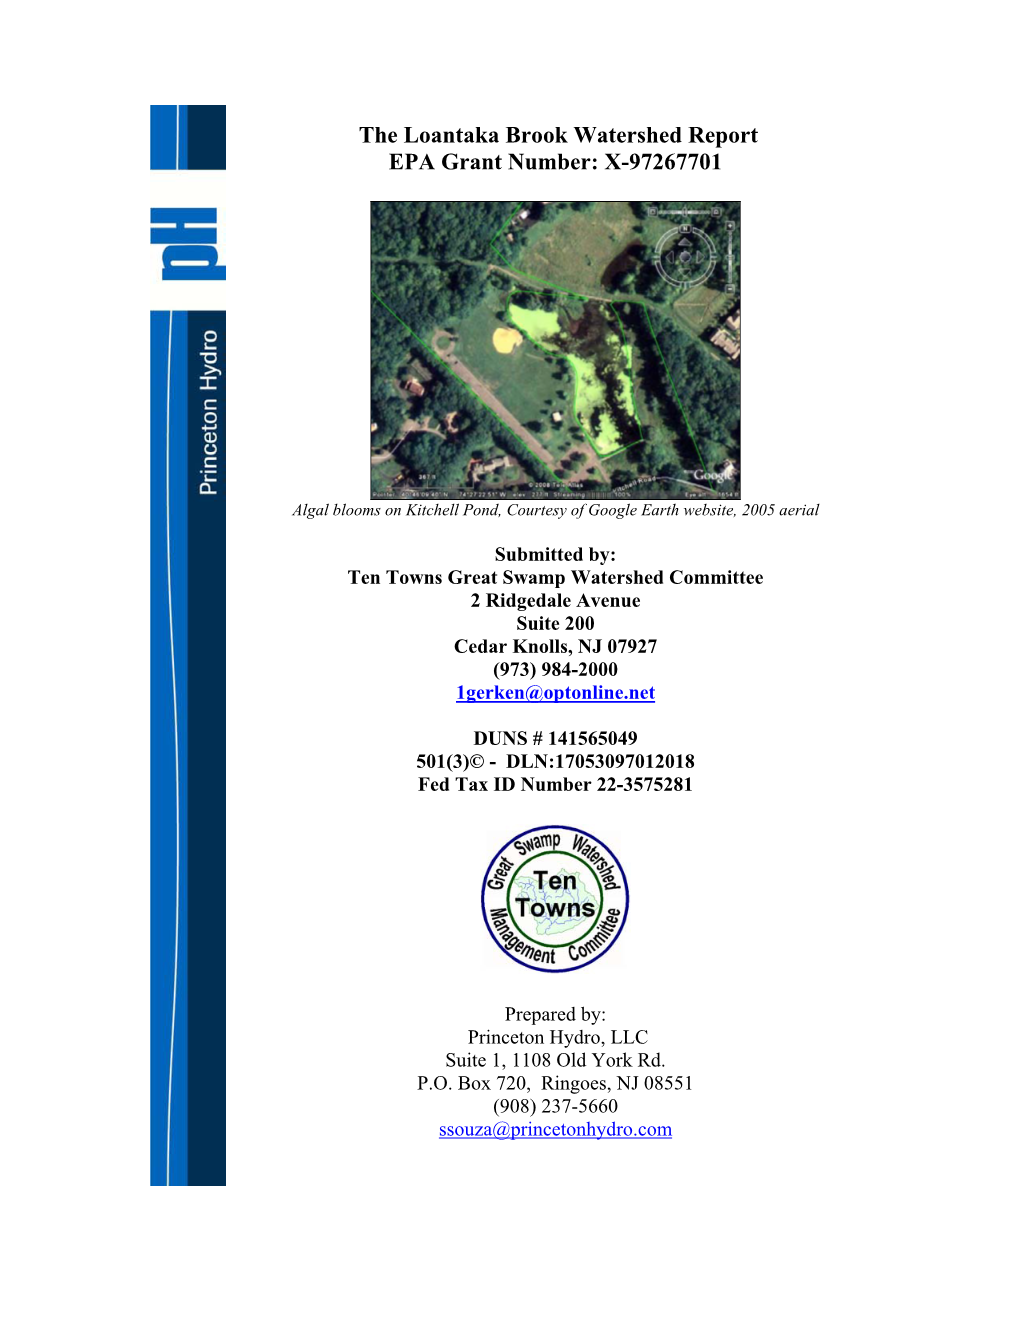 The Loantaka Brook Watershed Report EPA Grant Number: X-97267701